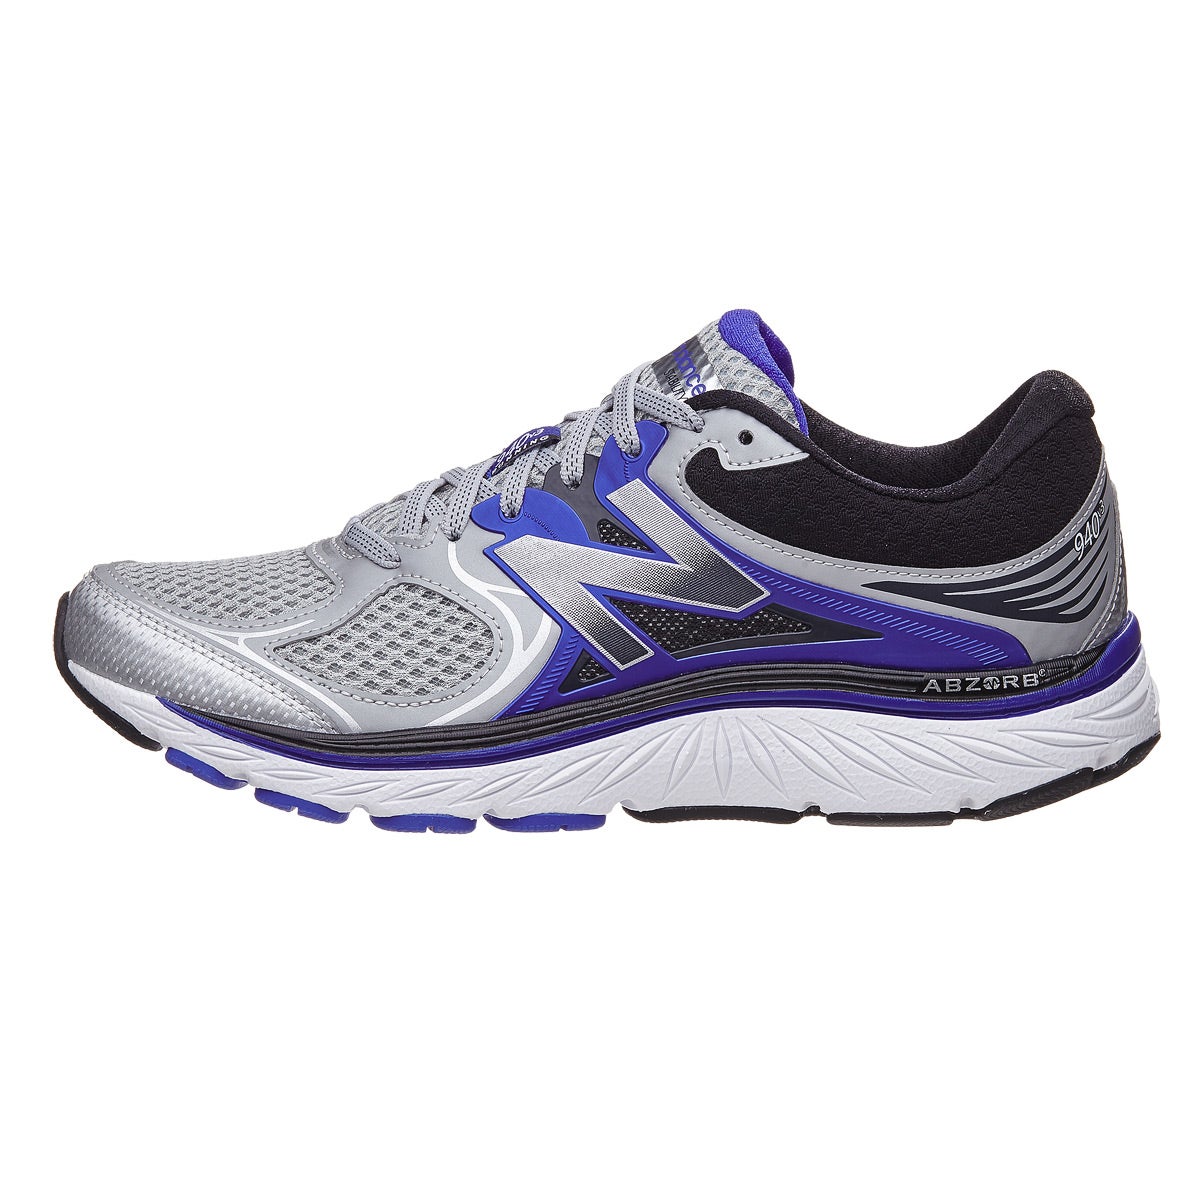 New Balance 940 v3 Men's Shoes Silver/Blue/Black 360° View | Running ...